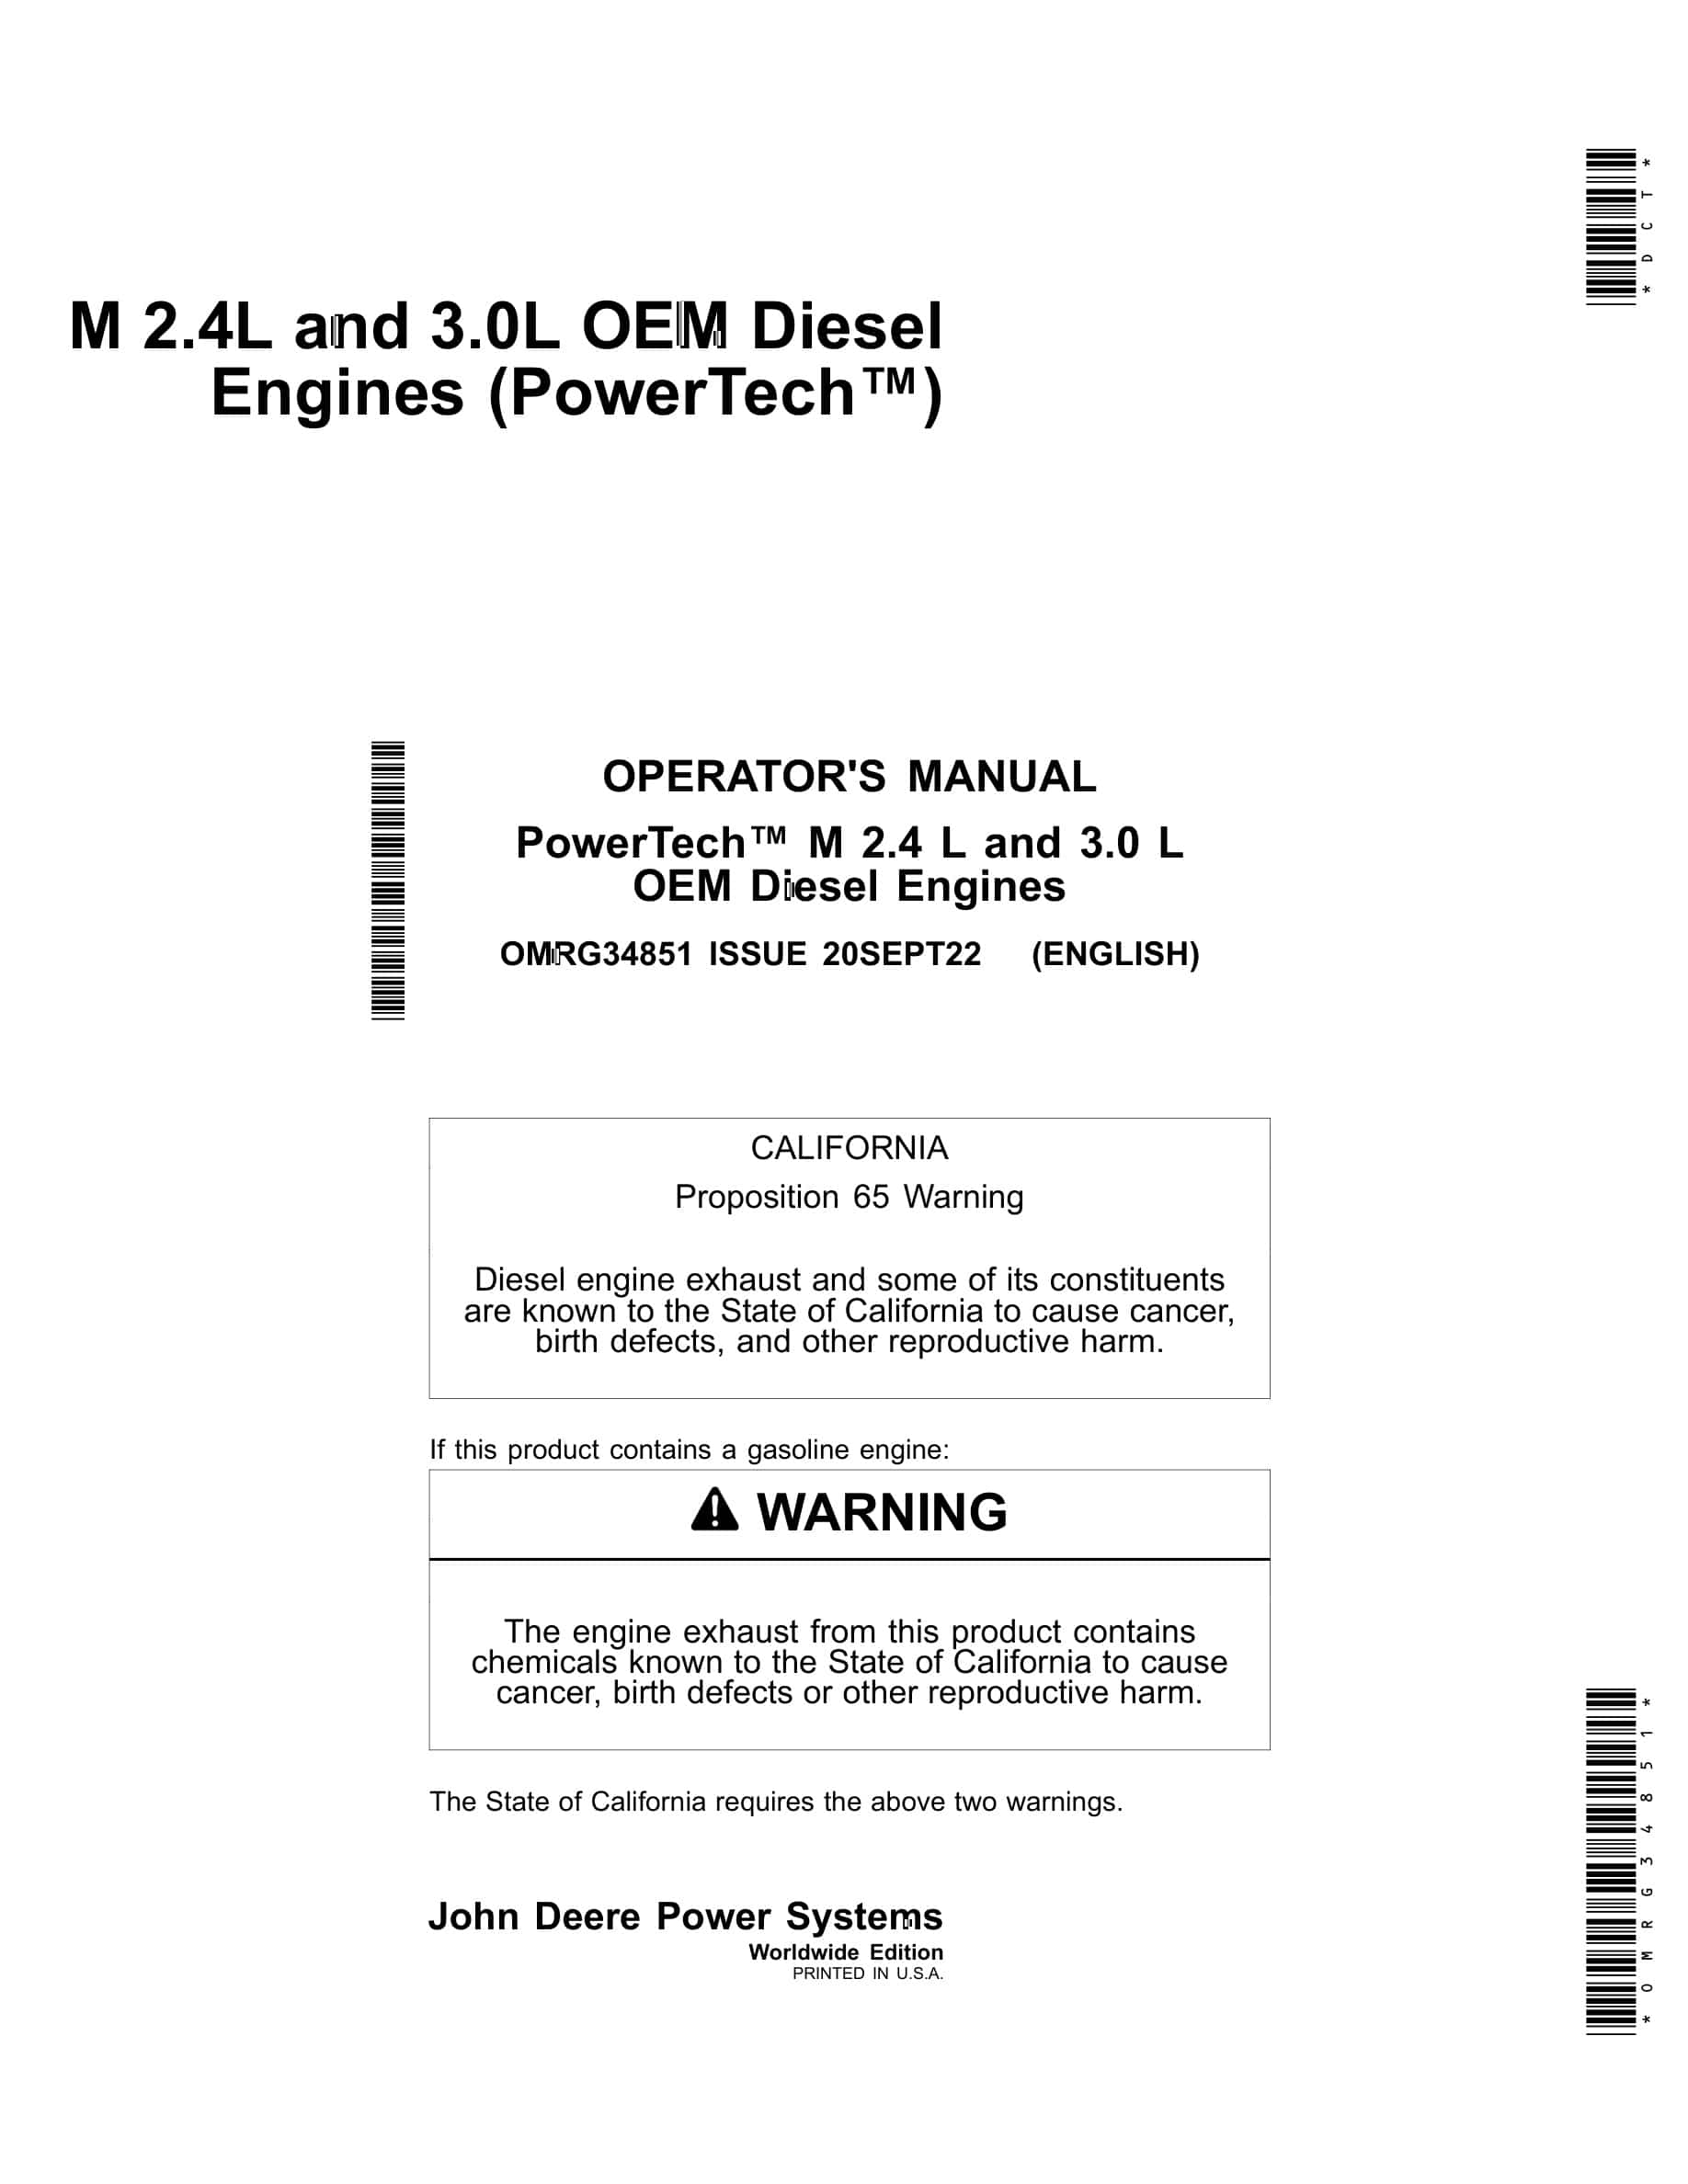 John Deere PowerTech M 2.4 L and 3.0 L OEM Diesel Engines Operator Manual OMRG34851-1